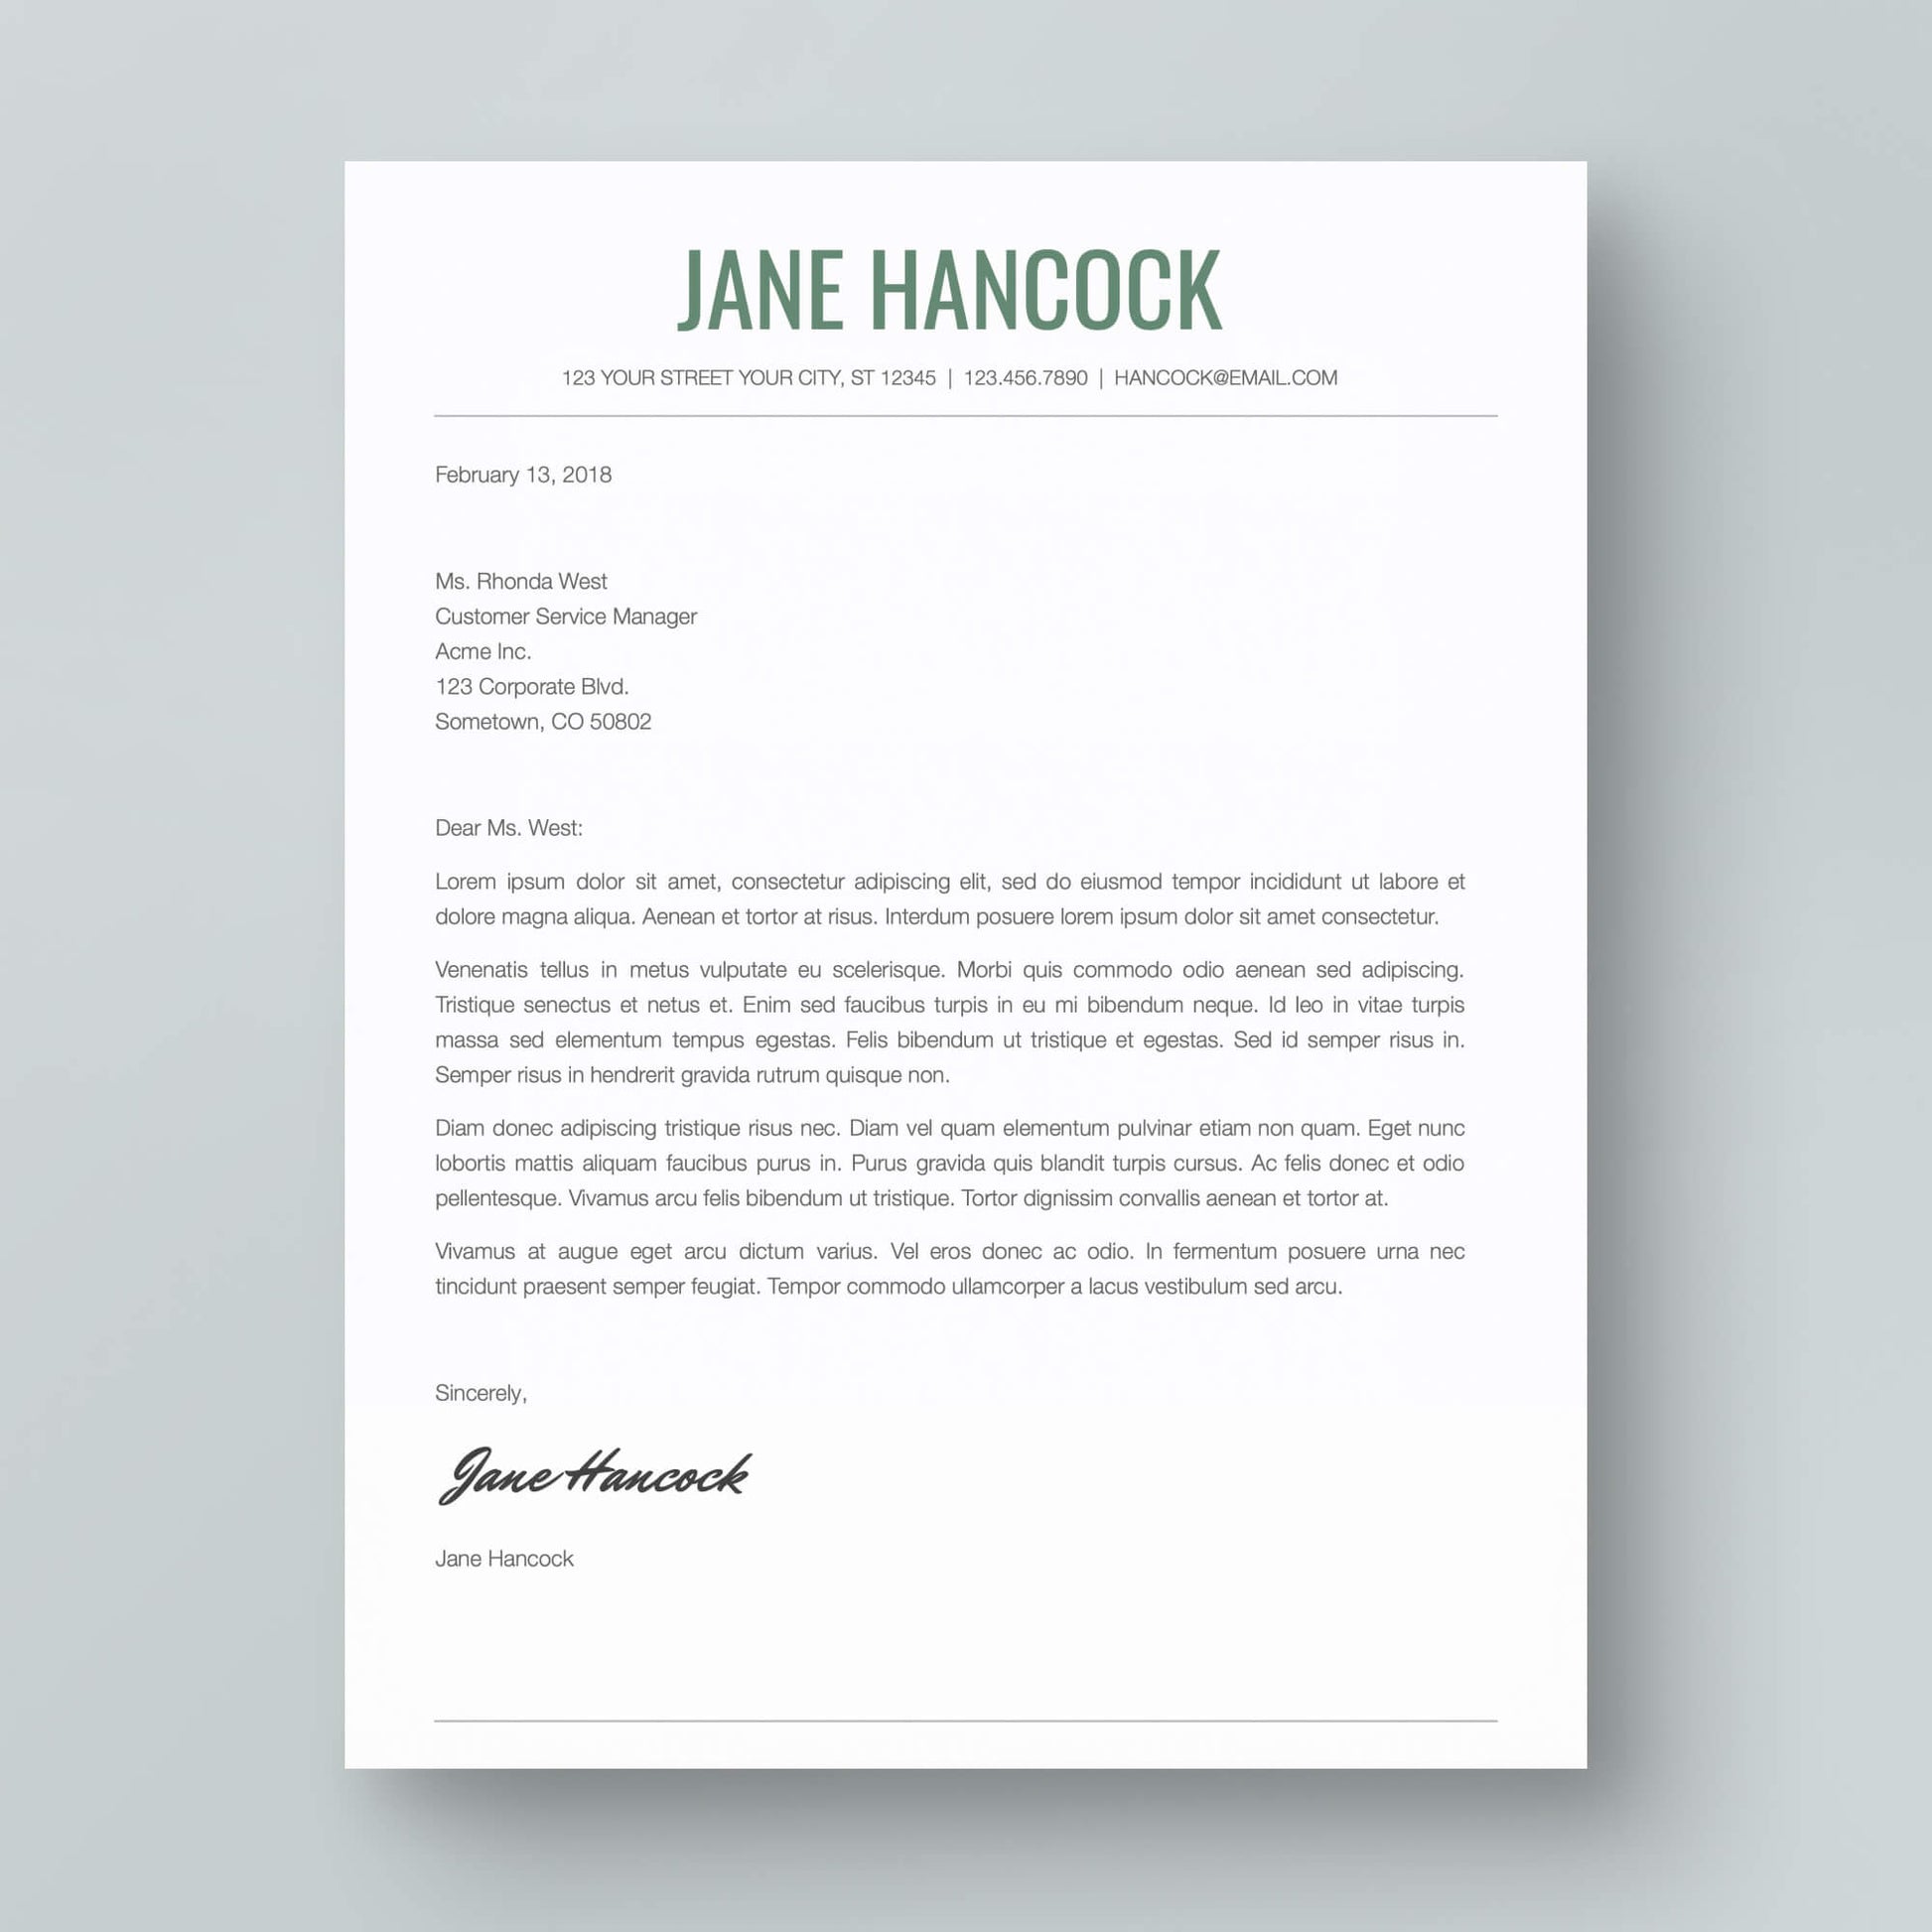 Resume Template: Jane Hancock - MioDocs